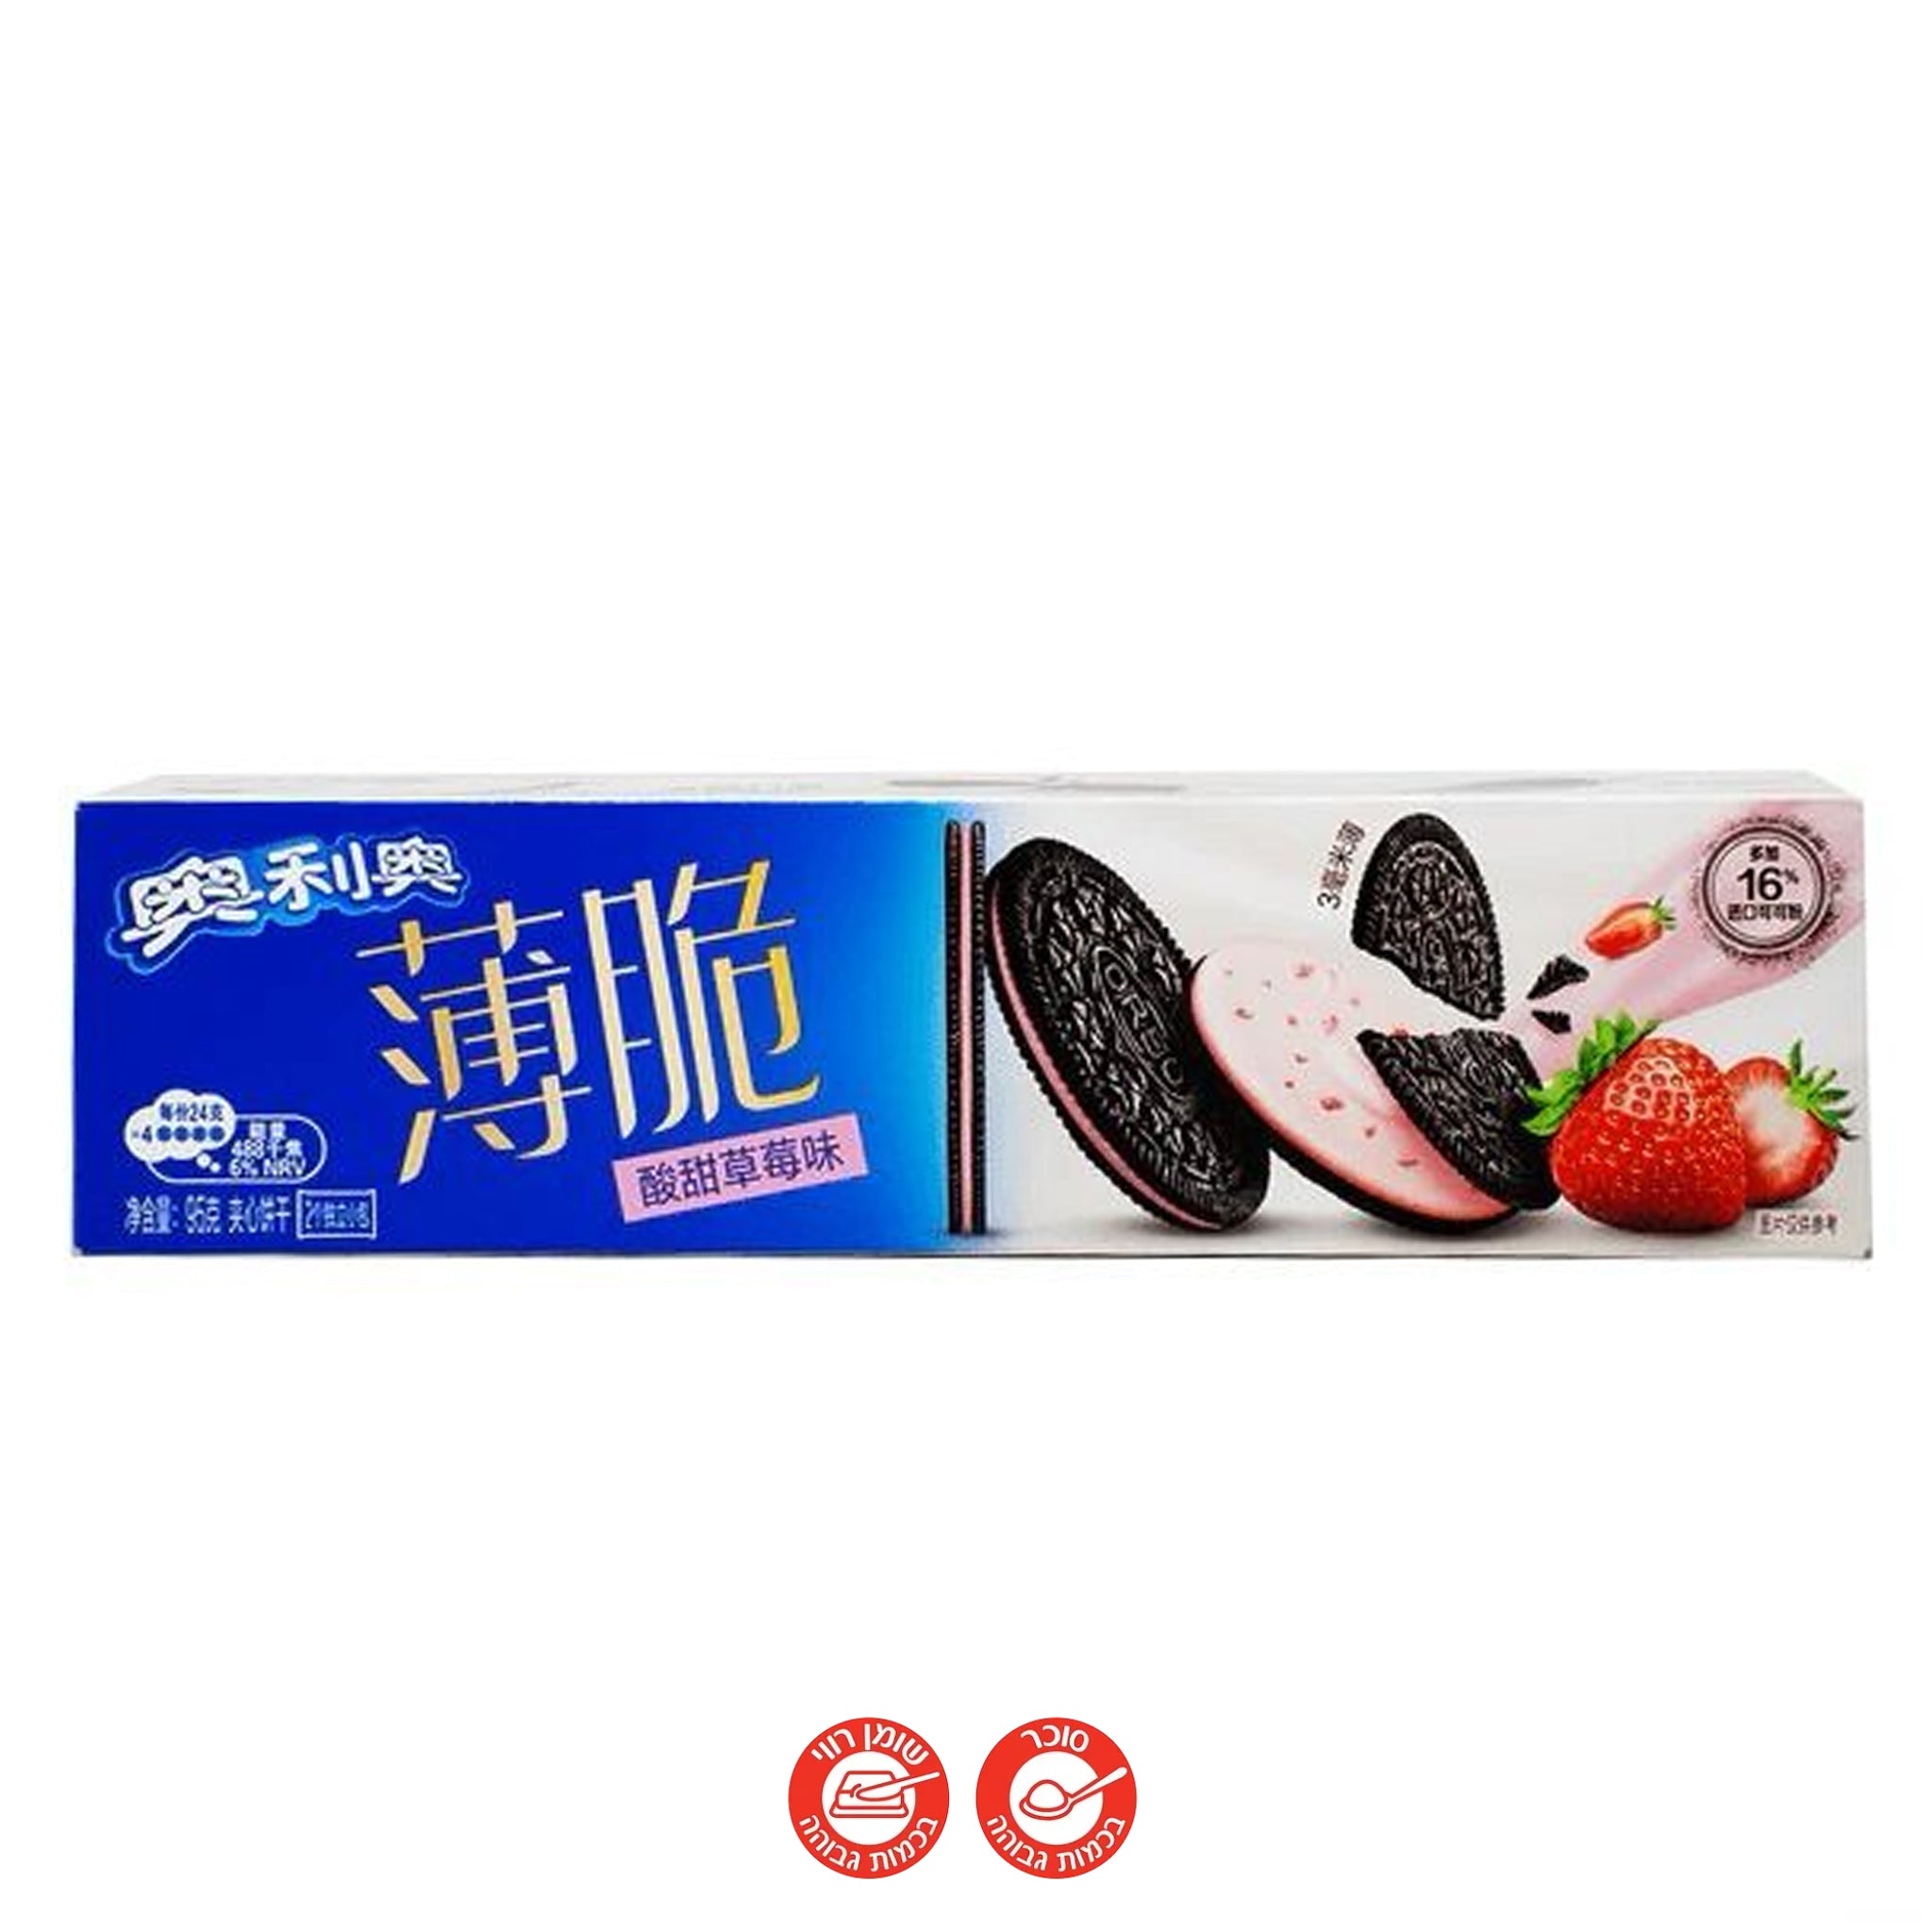 Oreo Strawberry אוראו עם קרם תות